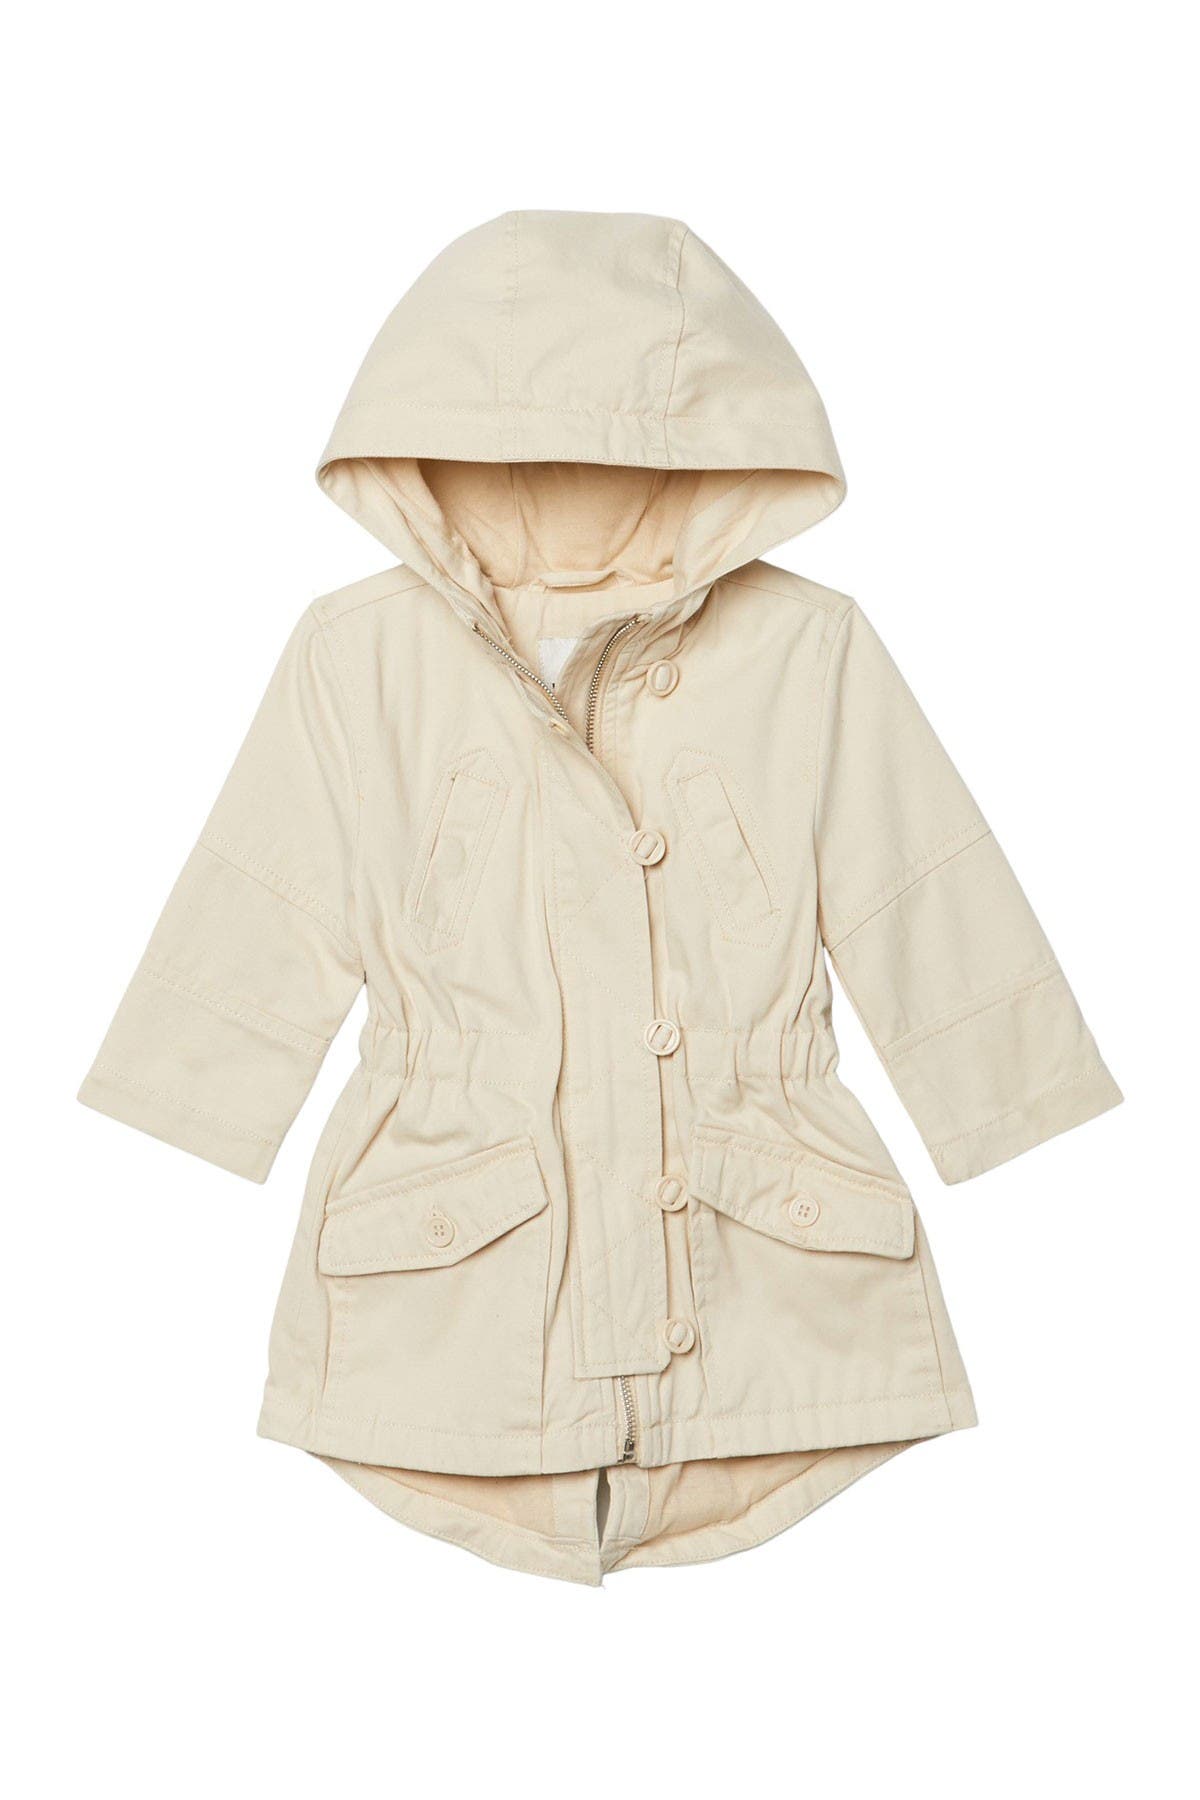 michael kors toddler winter coat